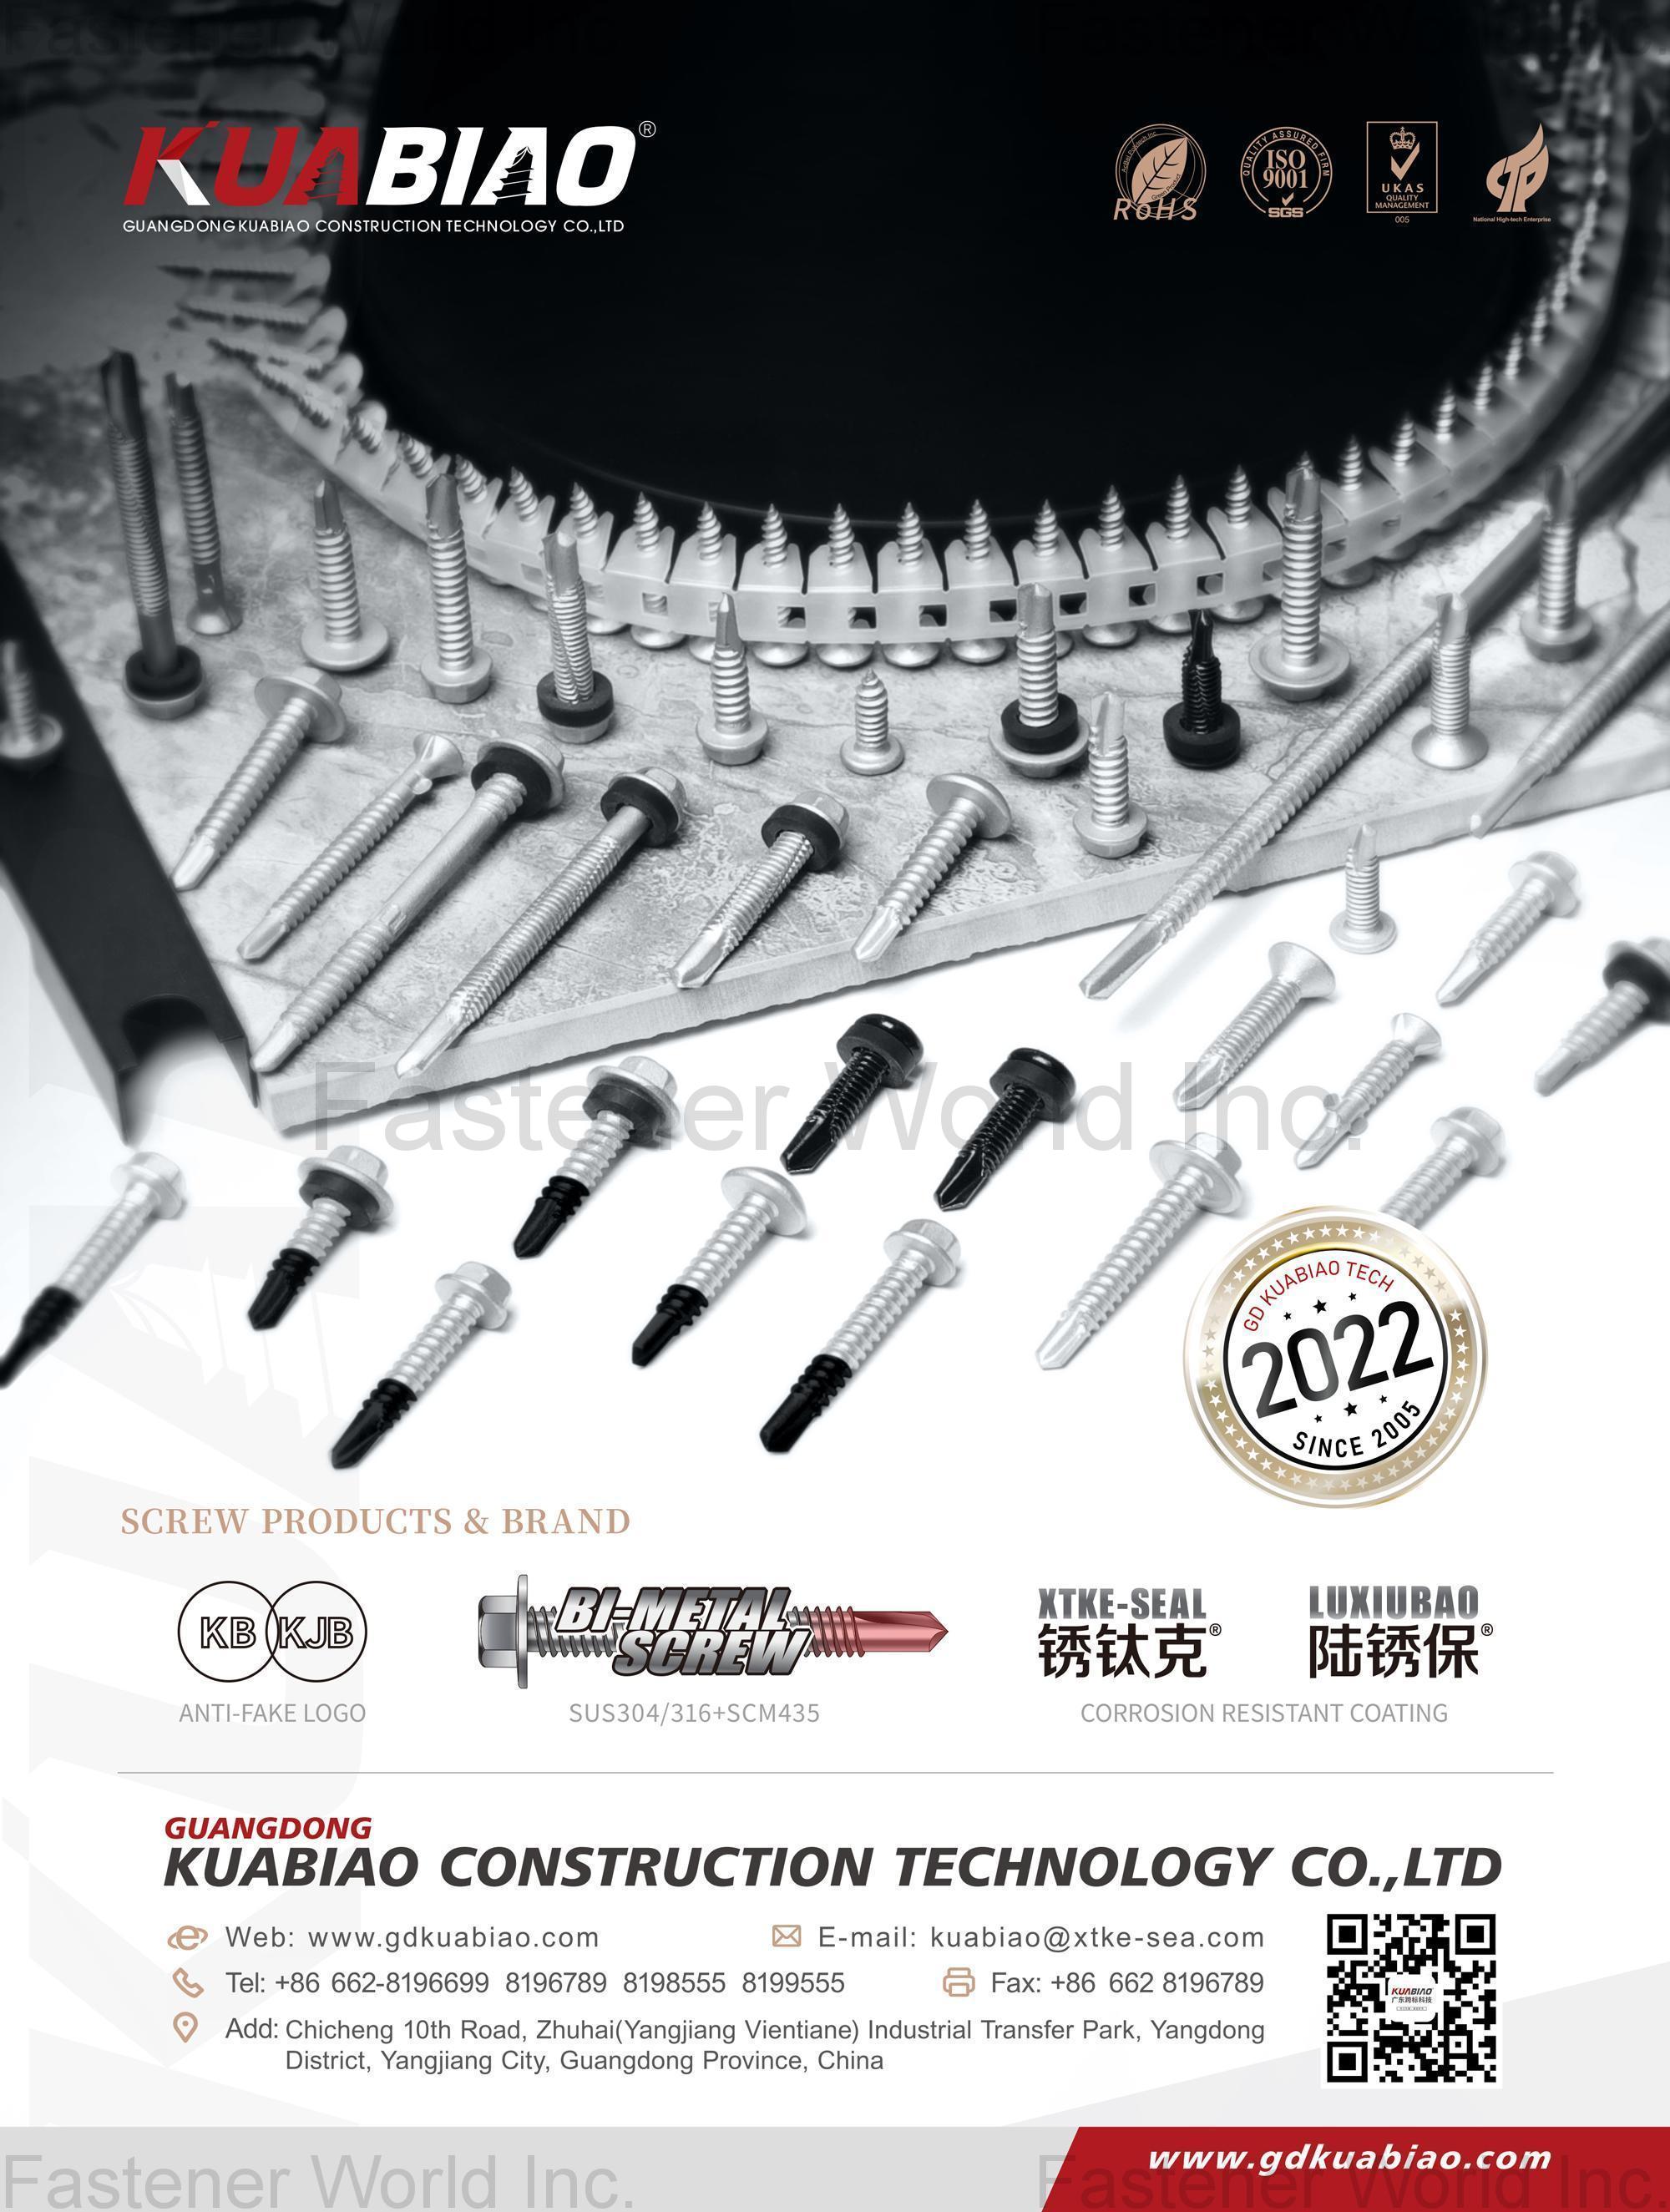 GUANGDONG KUABIAO CONSTRUCTION TECHNOLOGY CO., LTD. 